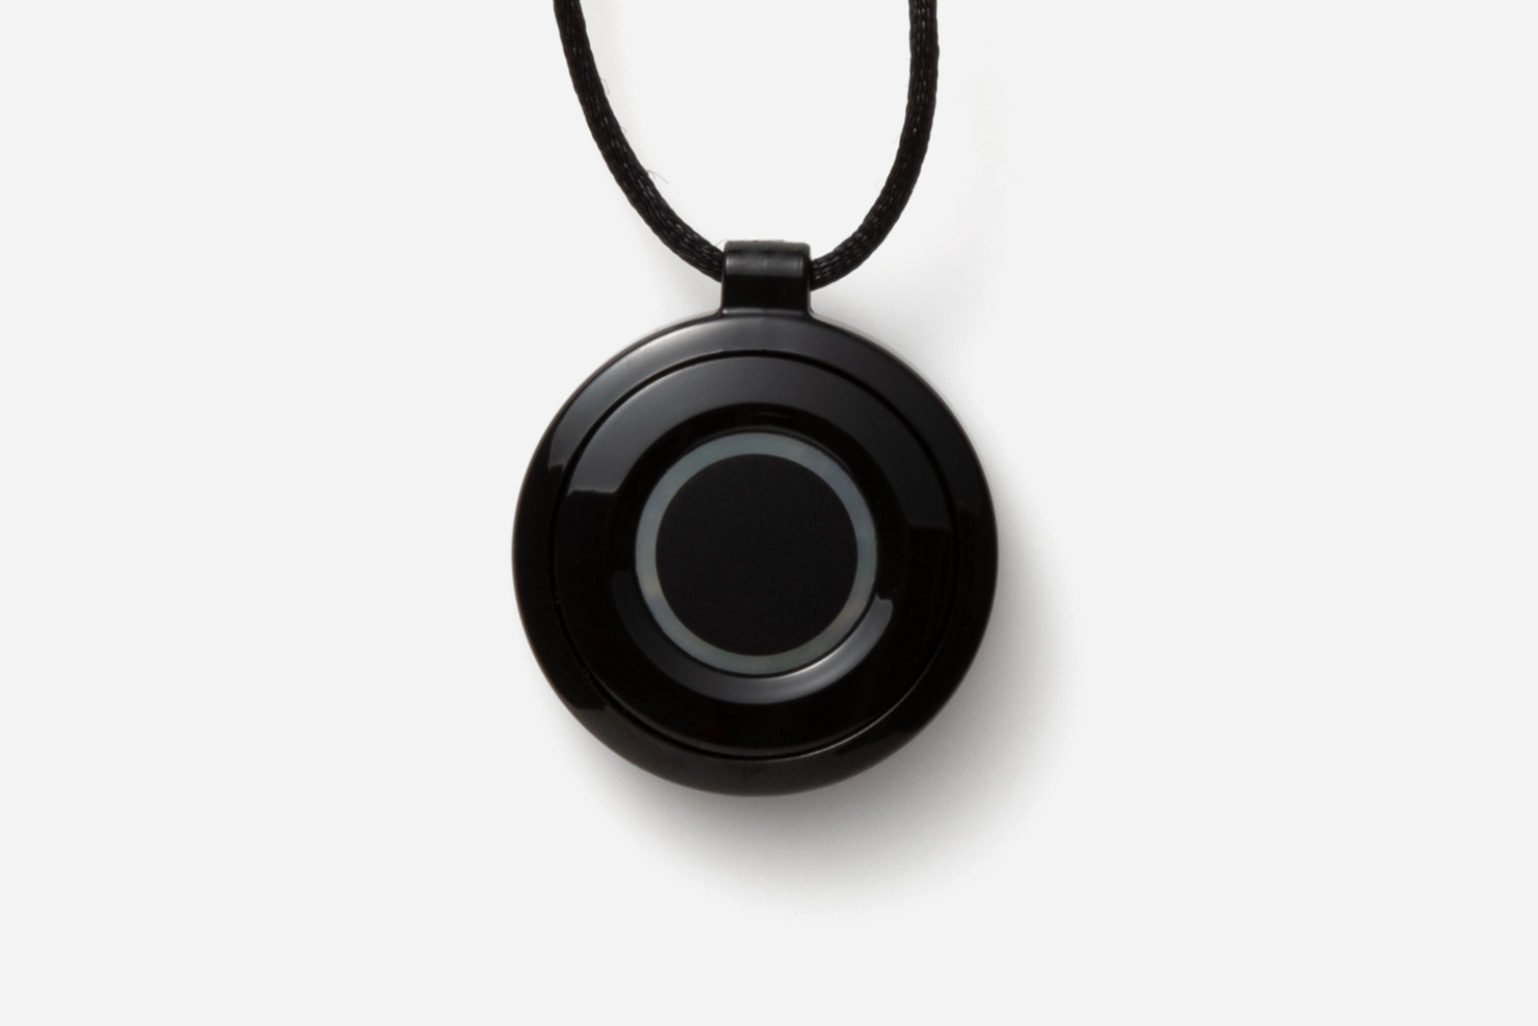 Black medical alert pendant shown from front